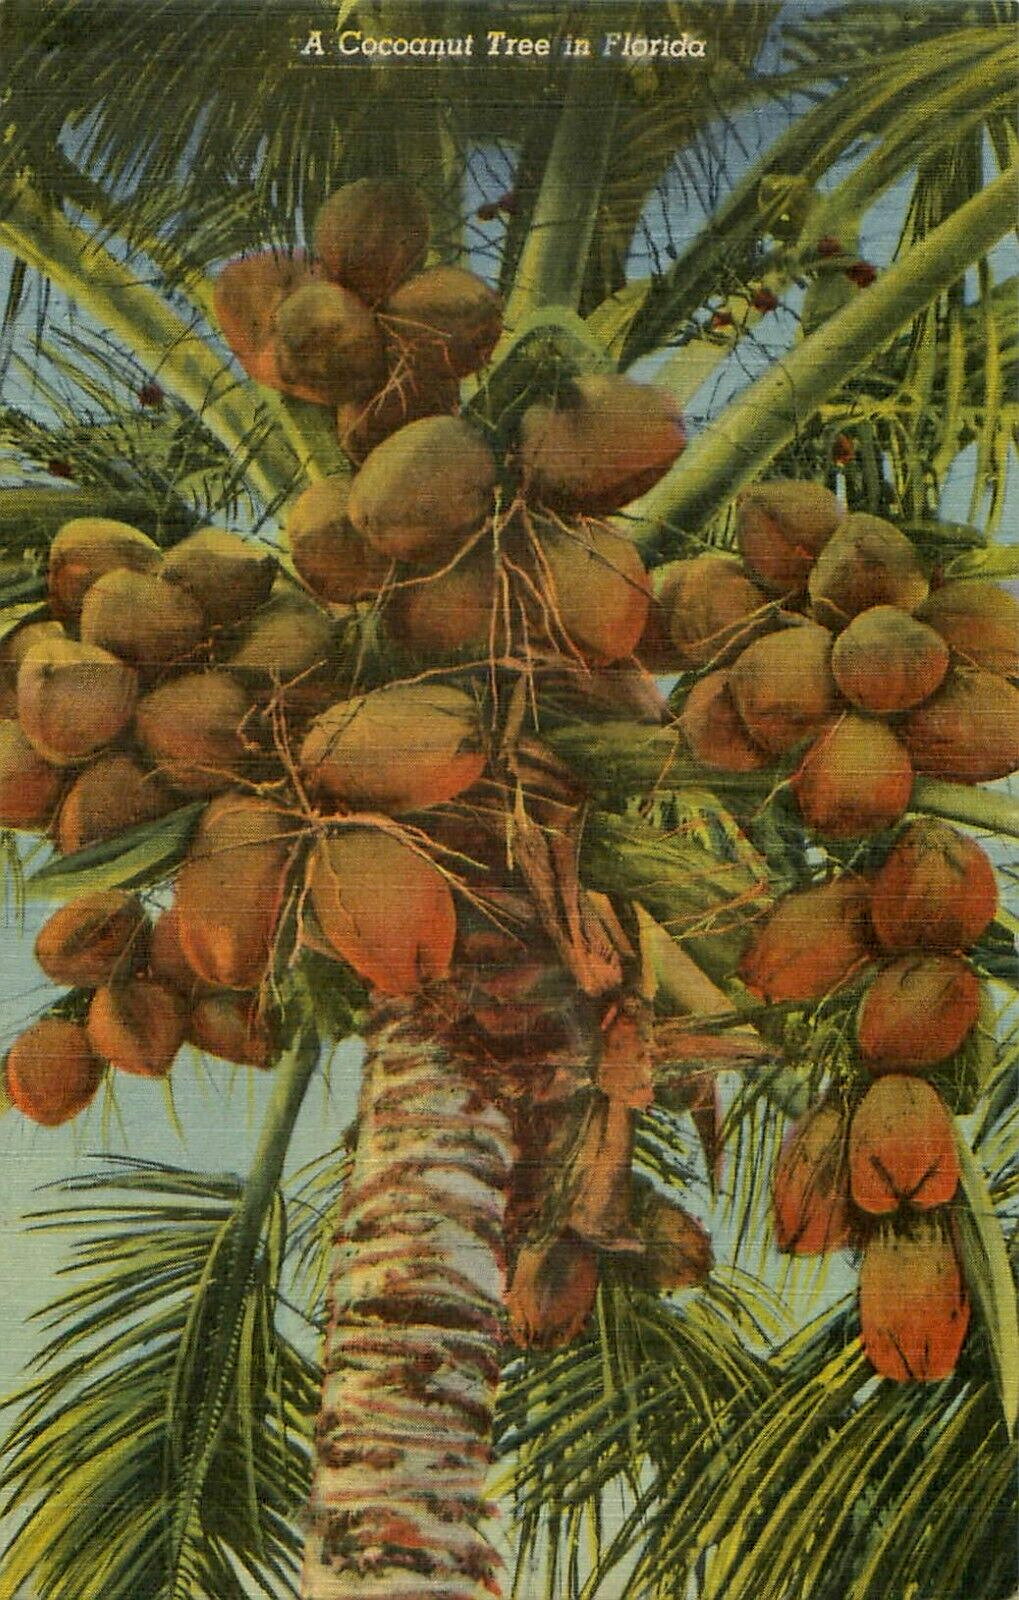 A Cocoanut Tree In Florida-Tropical Florida Series Vintage Linen Postcard